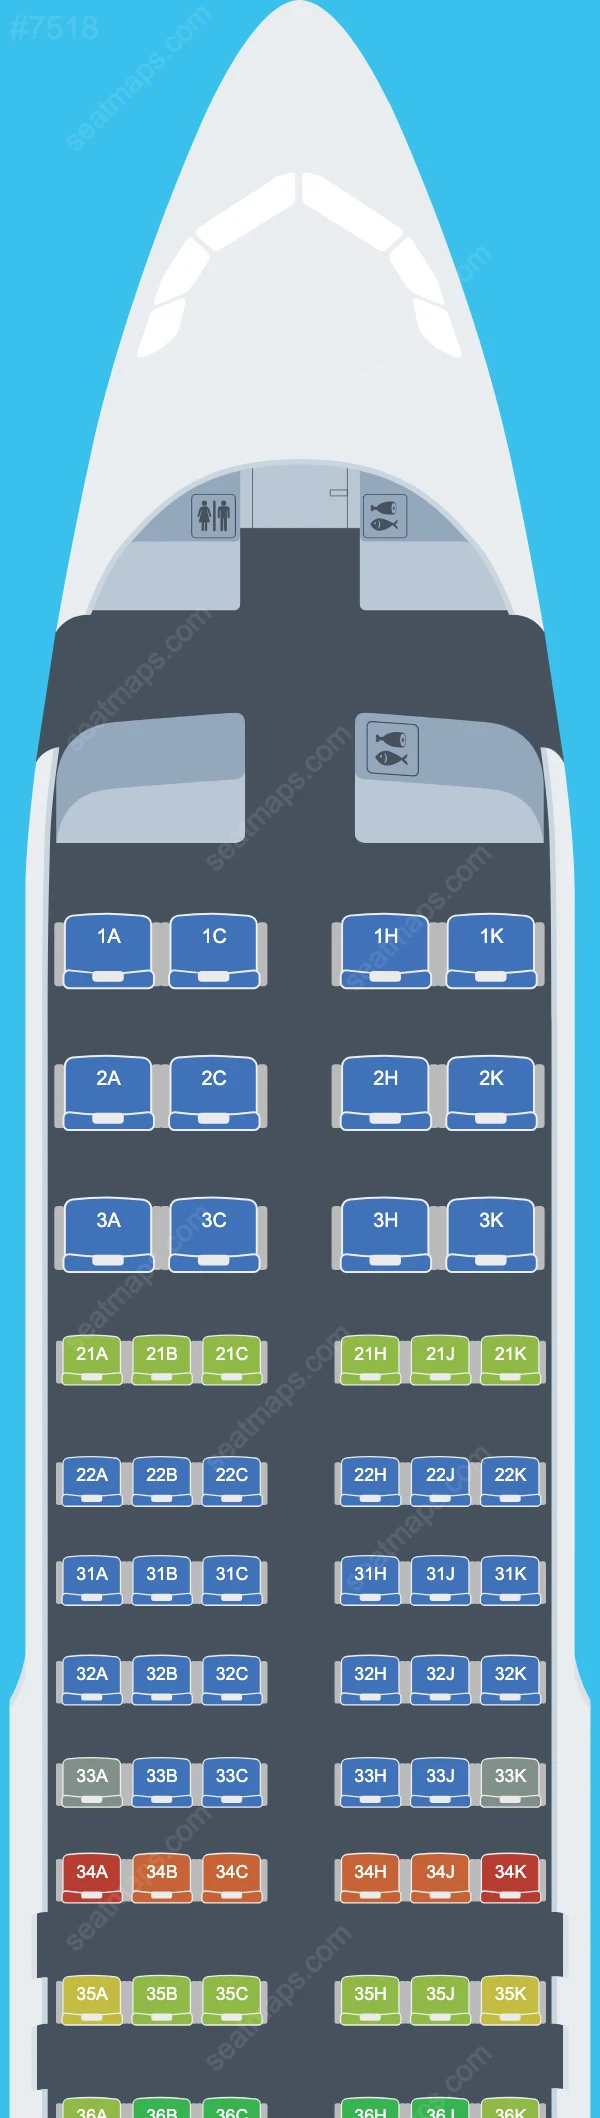 PAL Express Airbus A320 Seat Maps A320-200 V.2